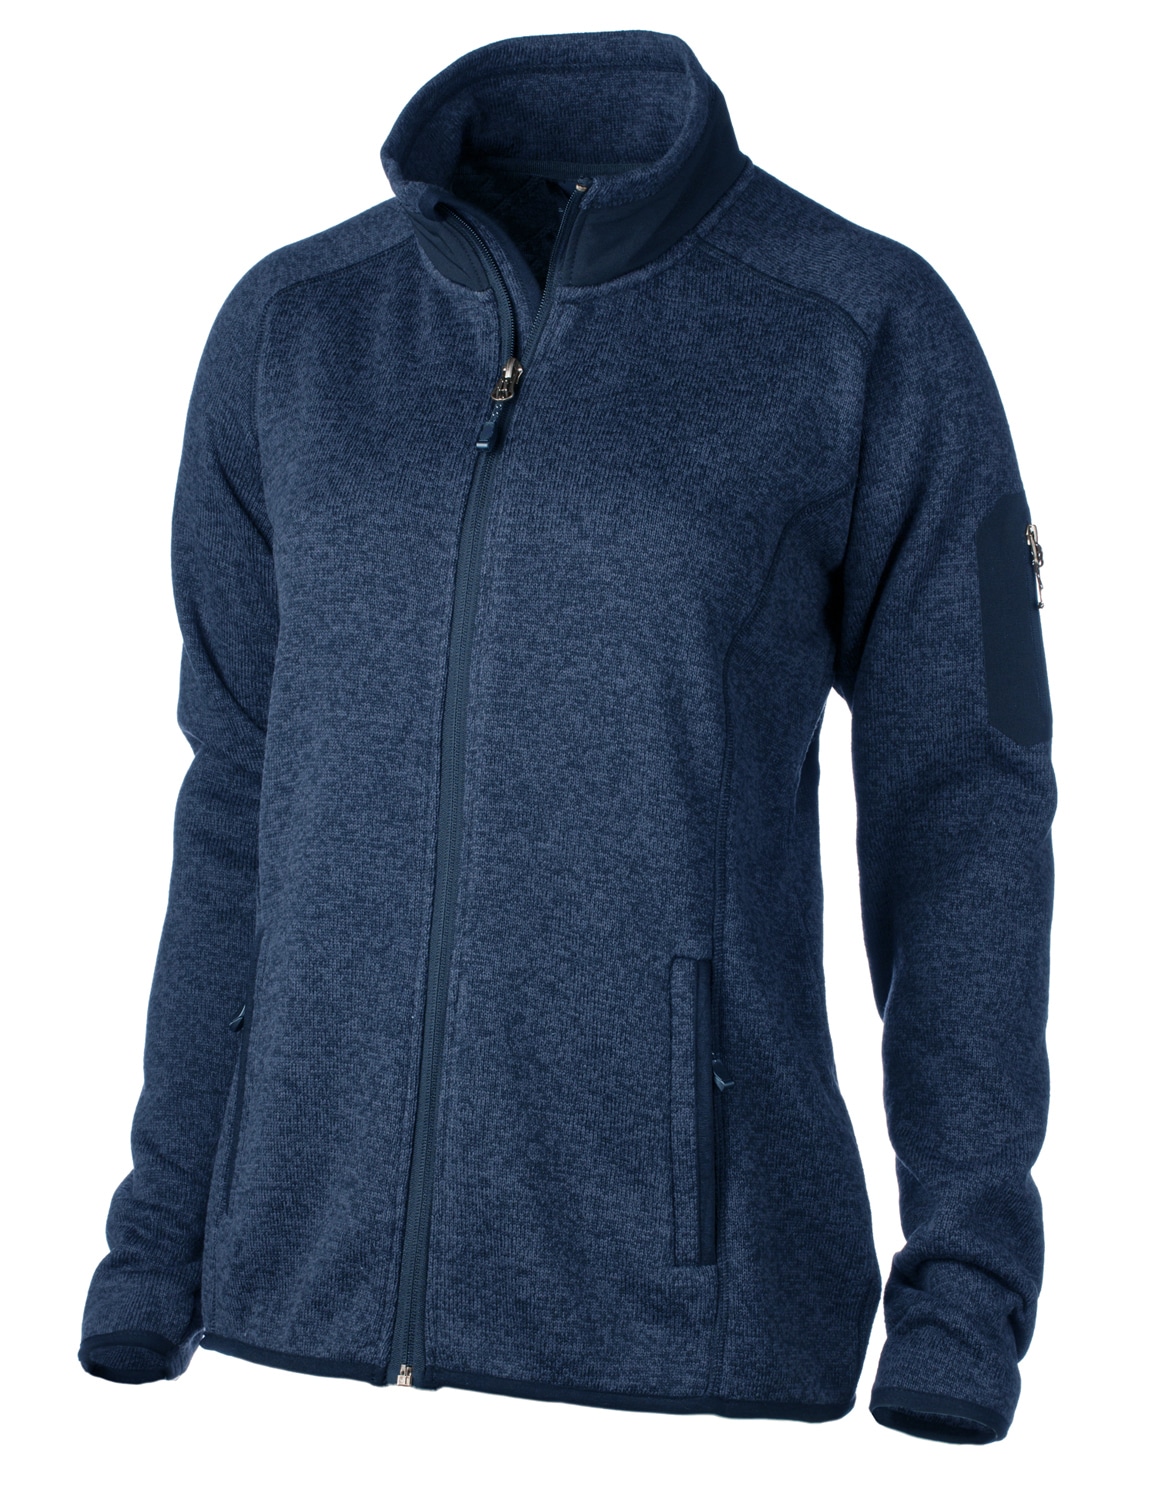 Fossa Apparel 3712 - Ladies Villa Sweater Fleece Jacket $55.58 - Outerwear